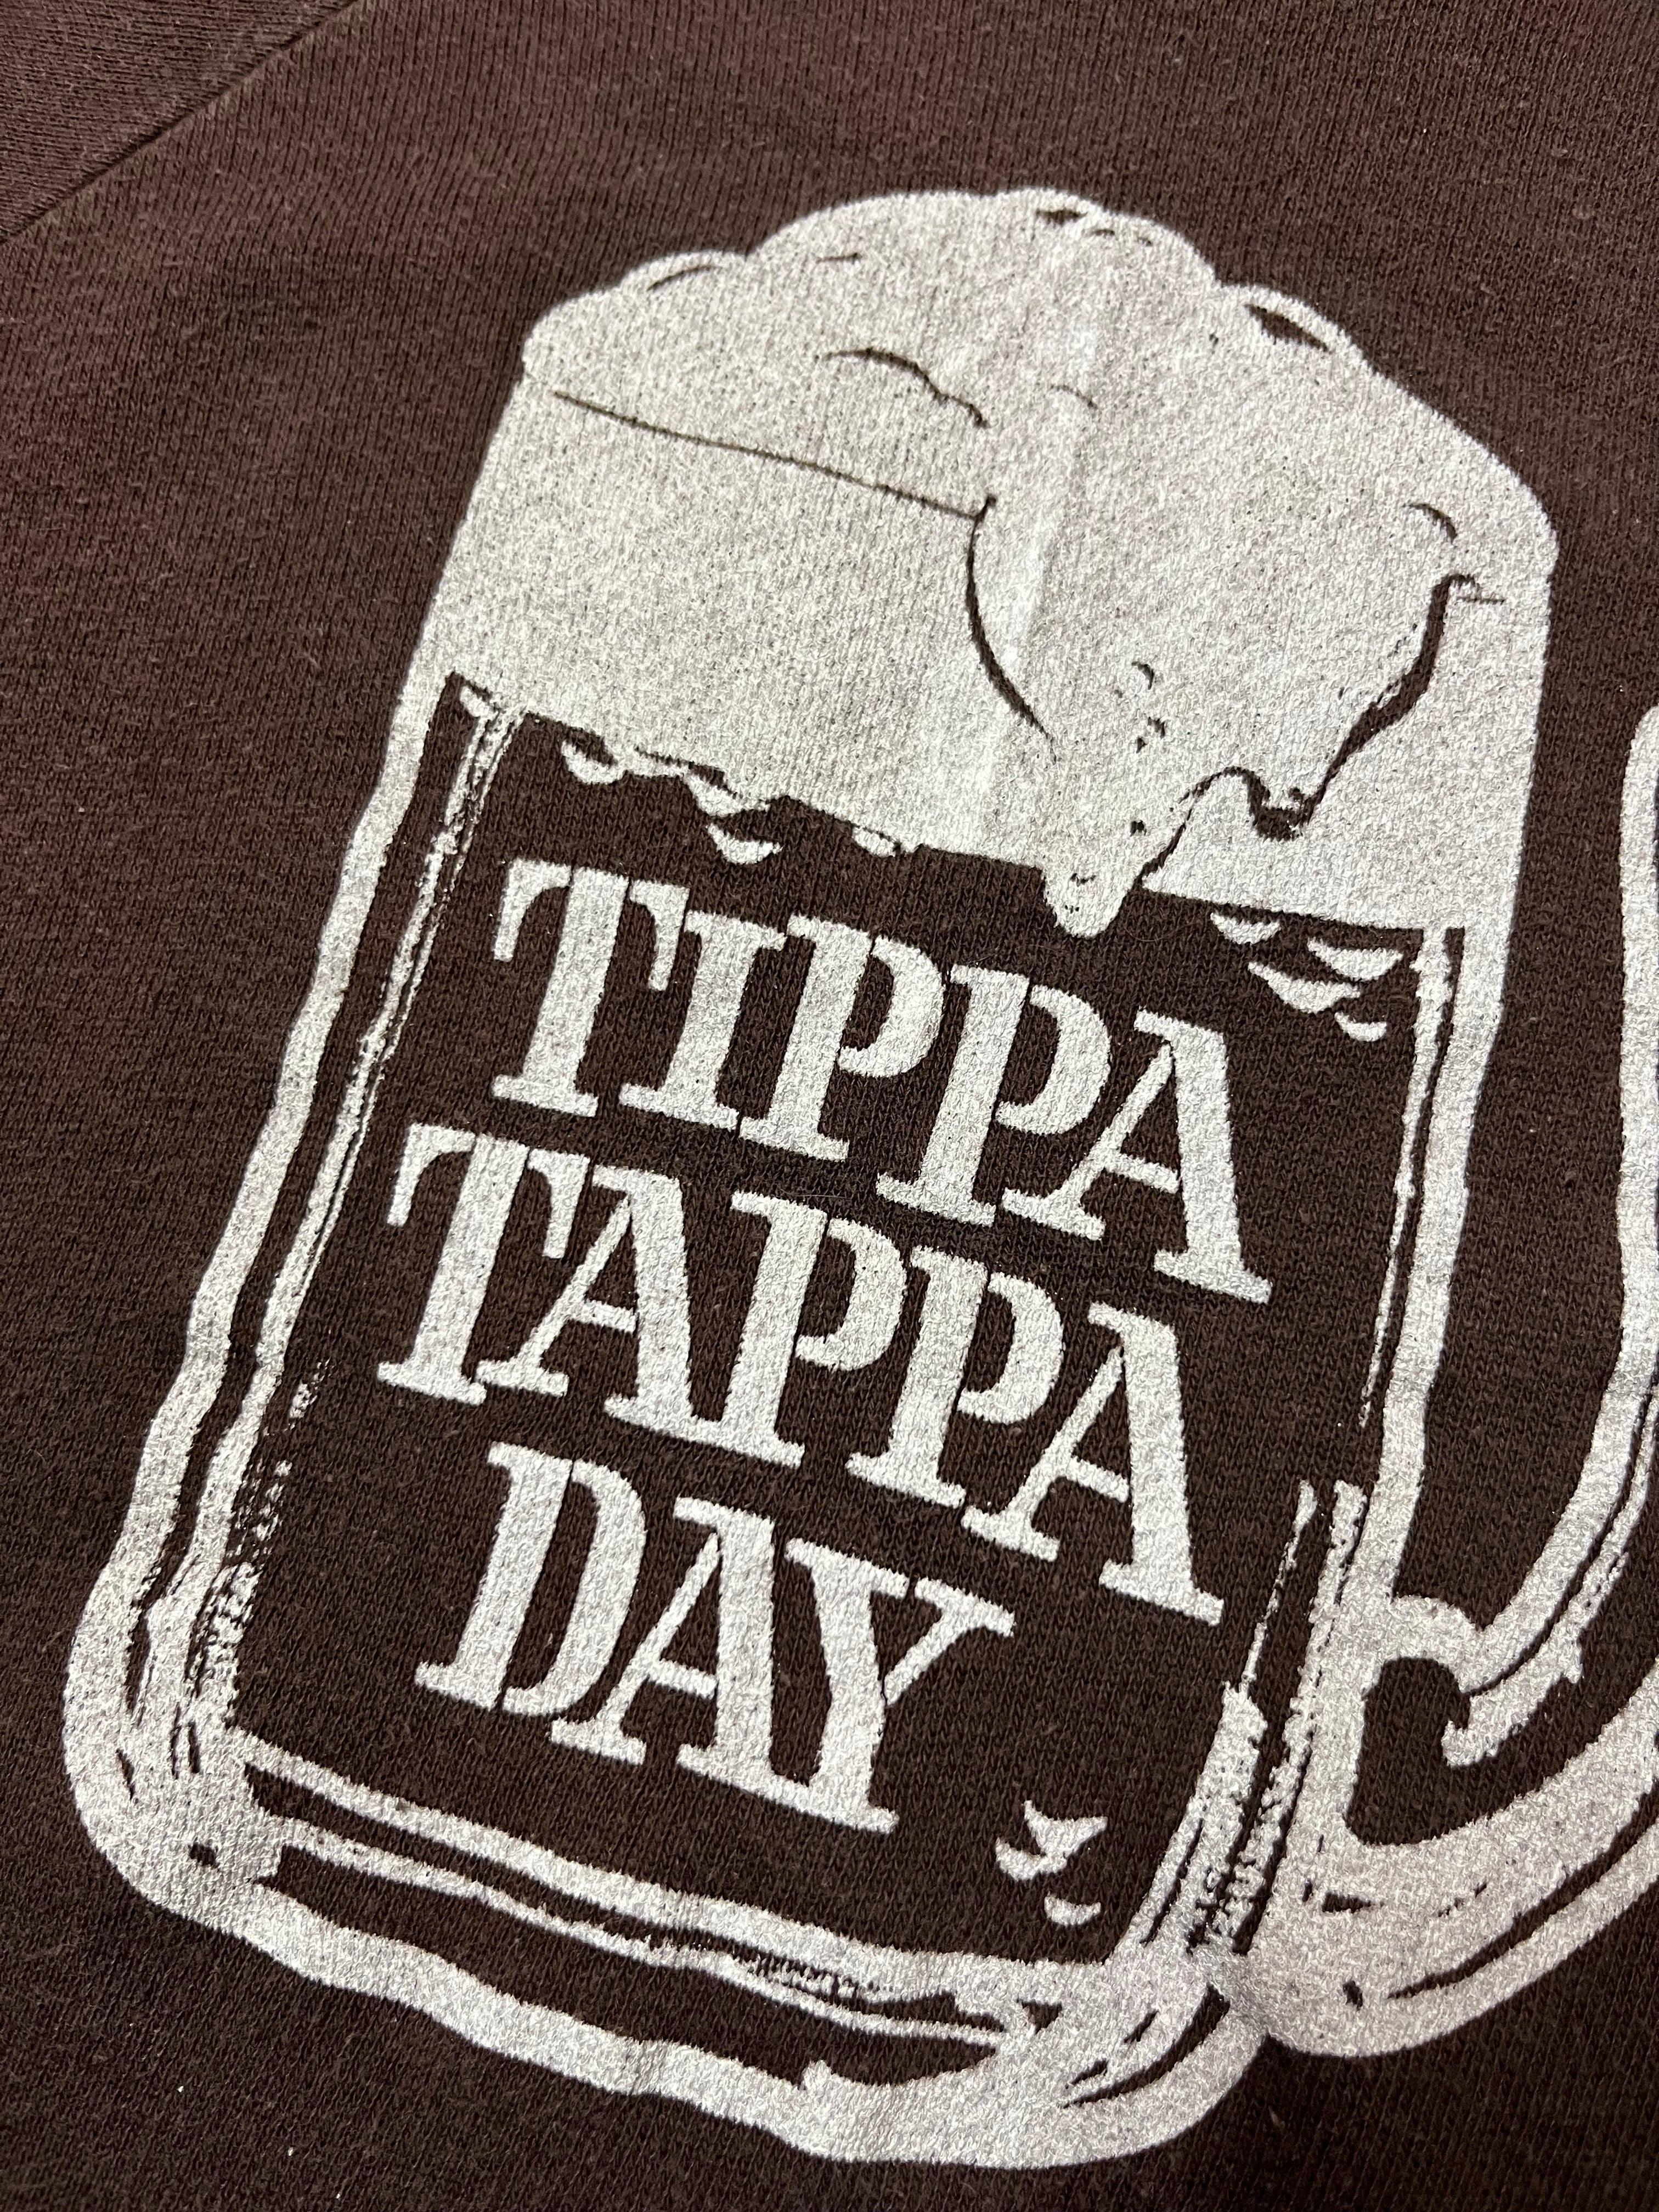 1960s ‘Tippa Tappa Day’ Beer Crewneck Sweatshirt - Chocolate Brown - L/XL